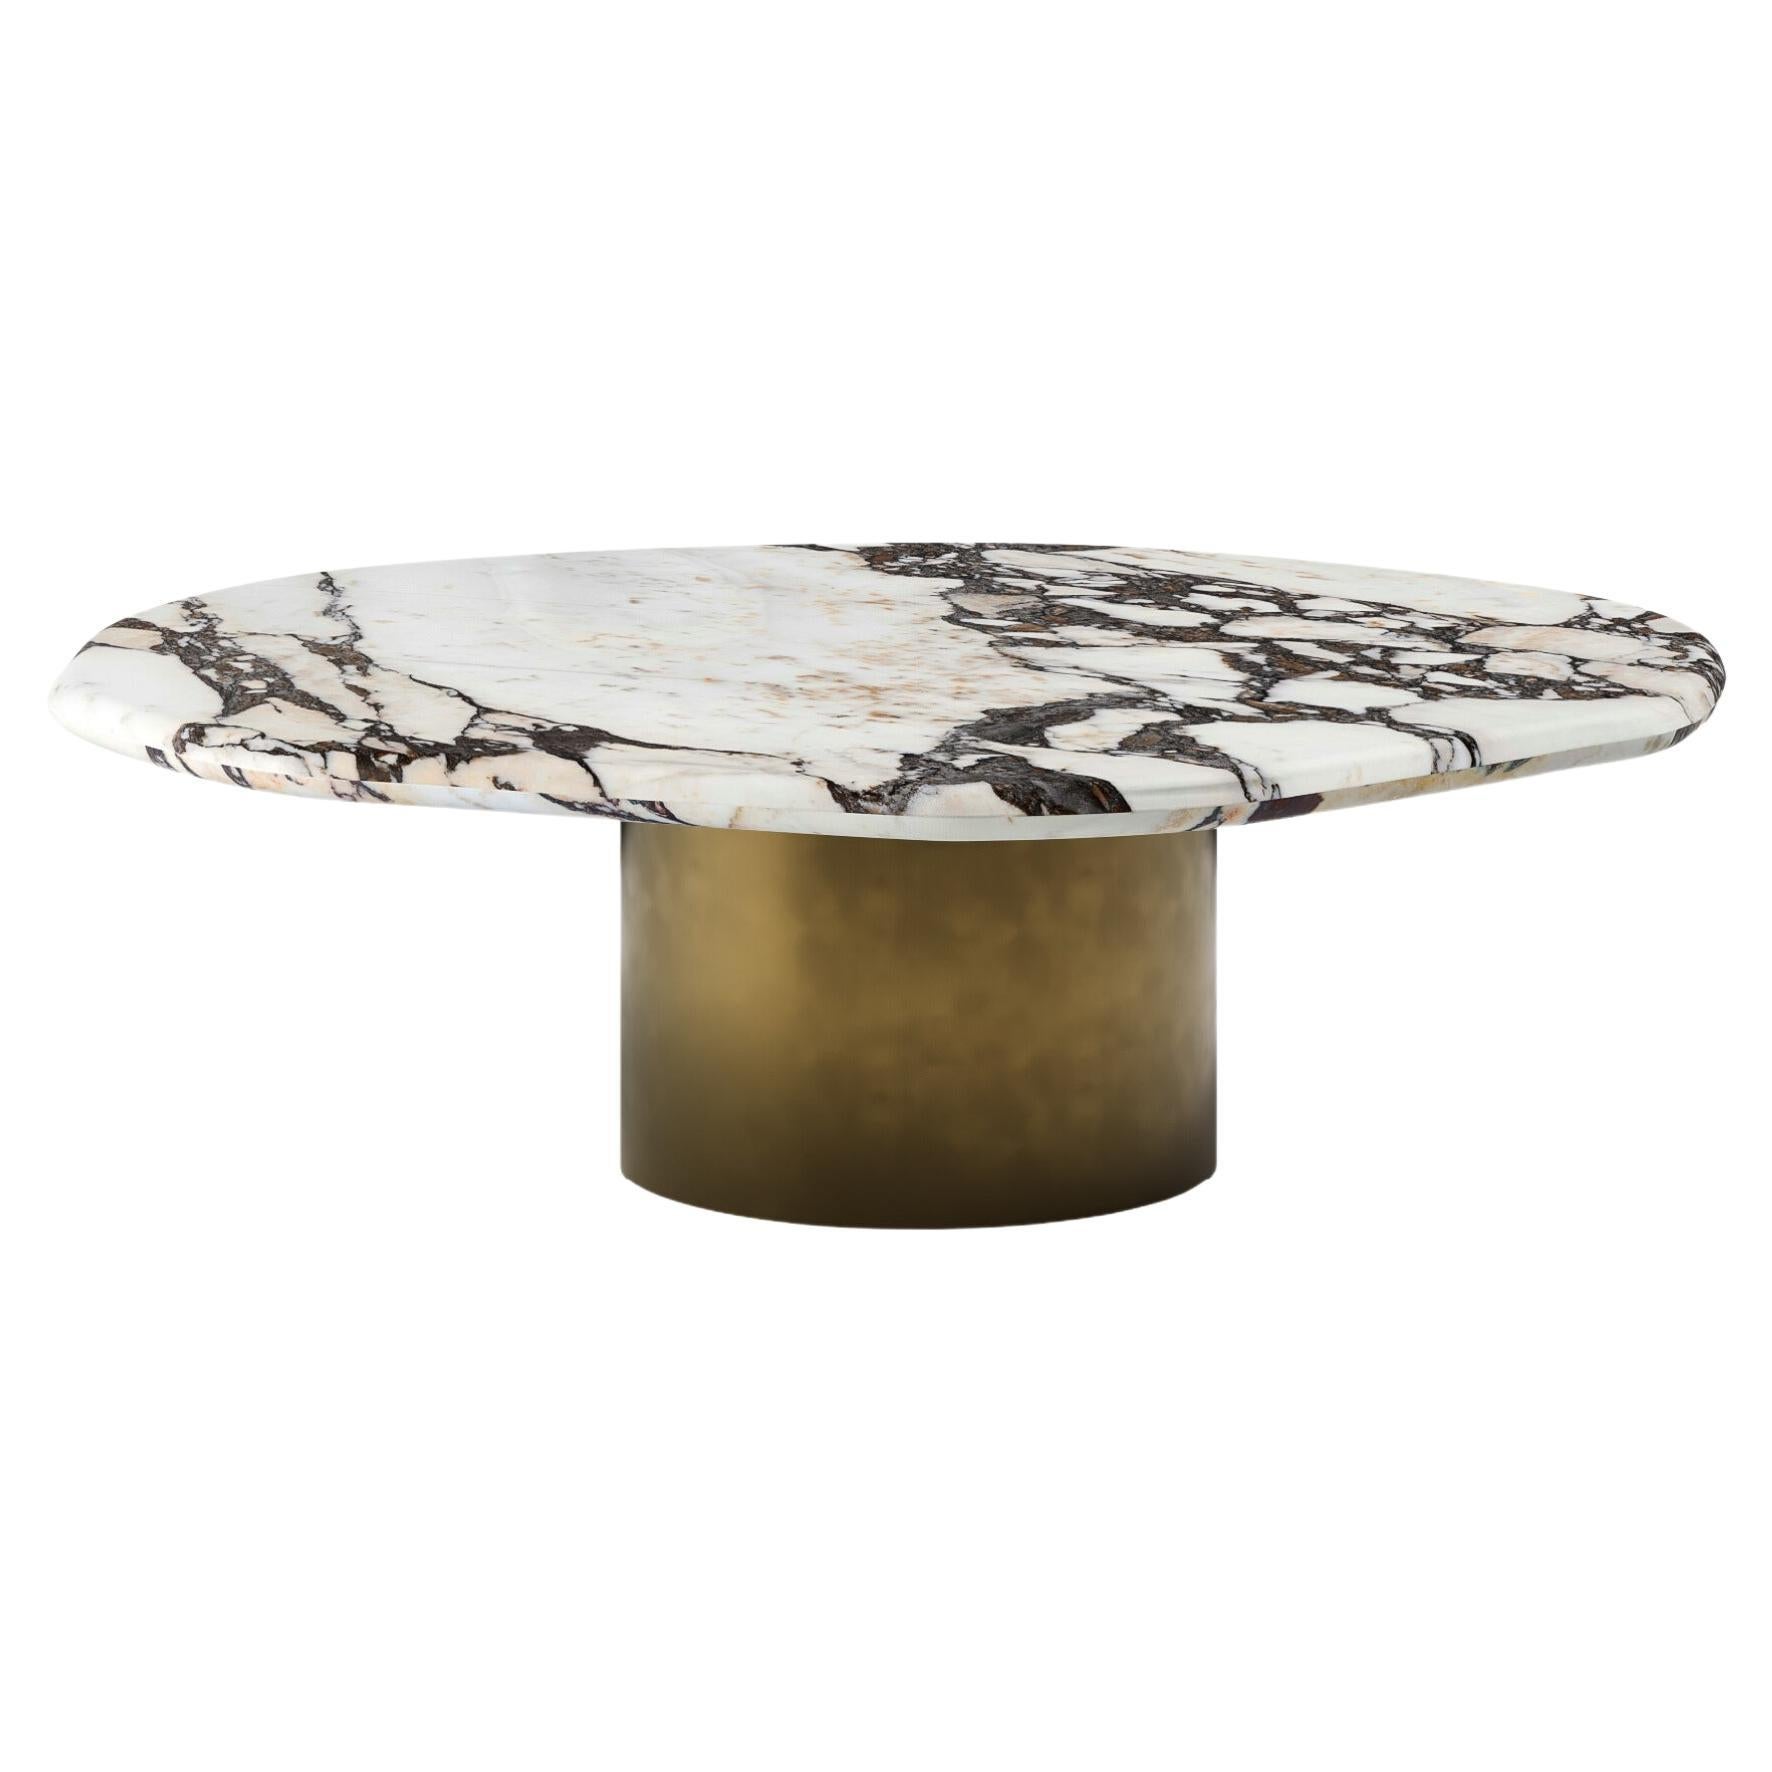 FORM(LA) Lago Round Coffee Table 60”L x 60”W x 14”H Viola Marble & Bronze For Sale